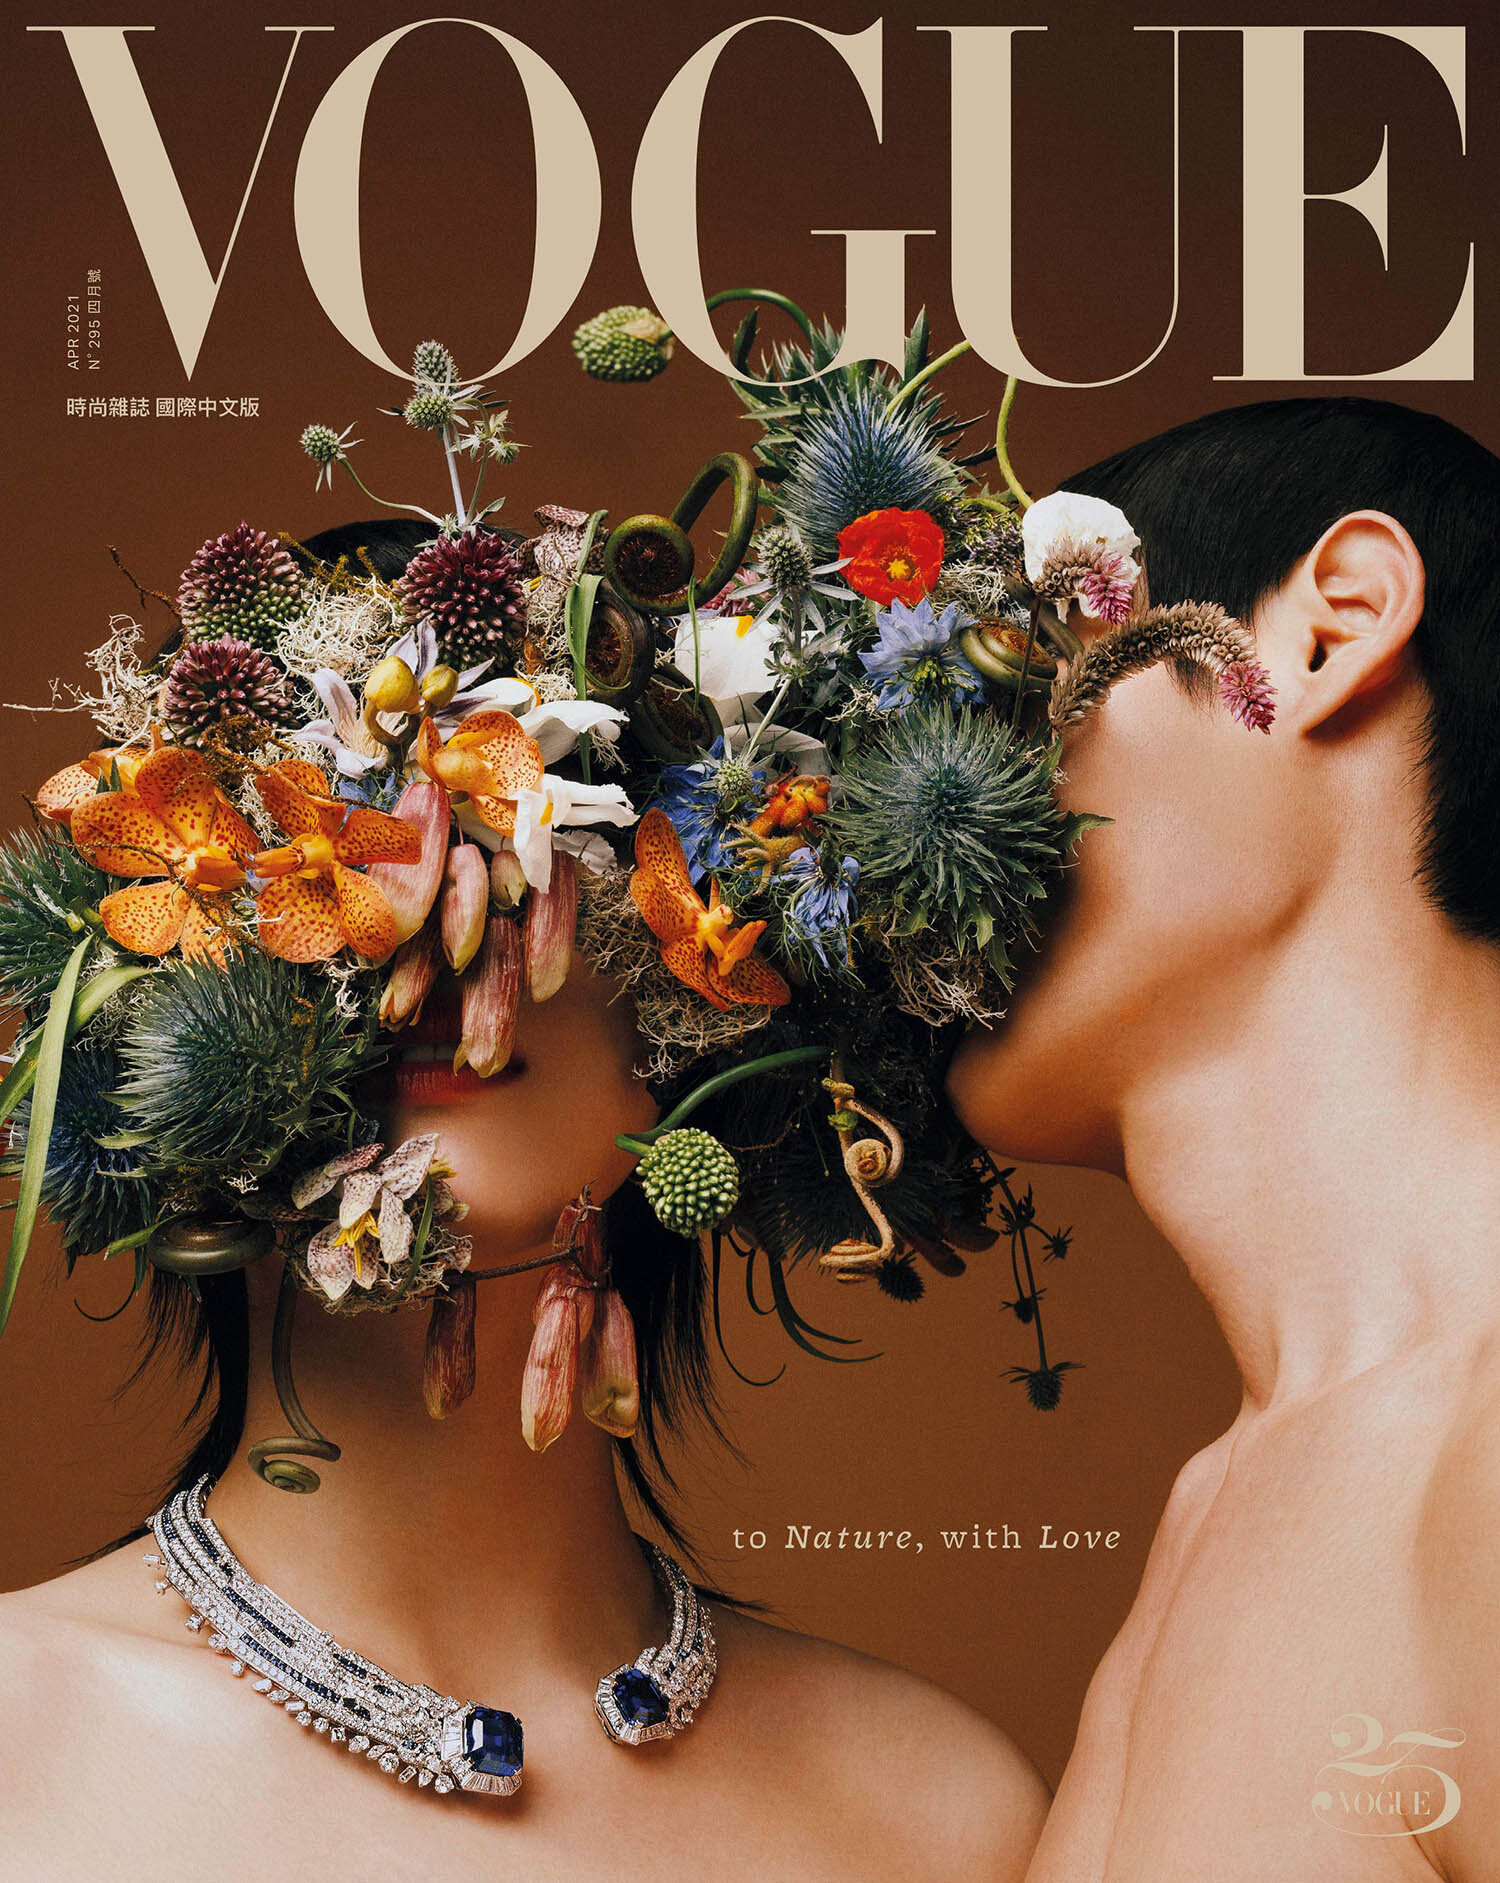 Zhong Lin for Vogue Taiwan April 2021 (2).jpg